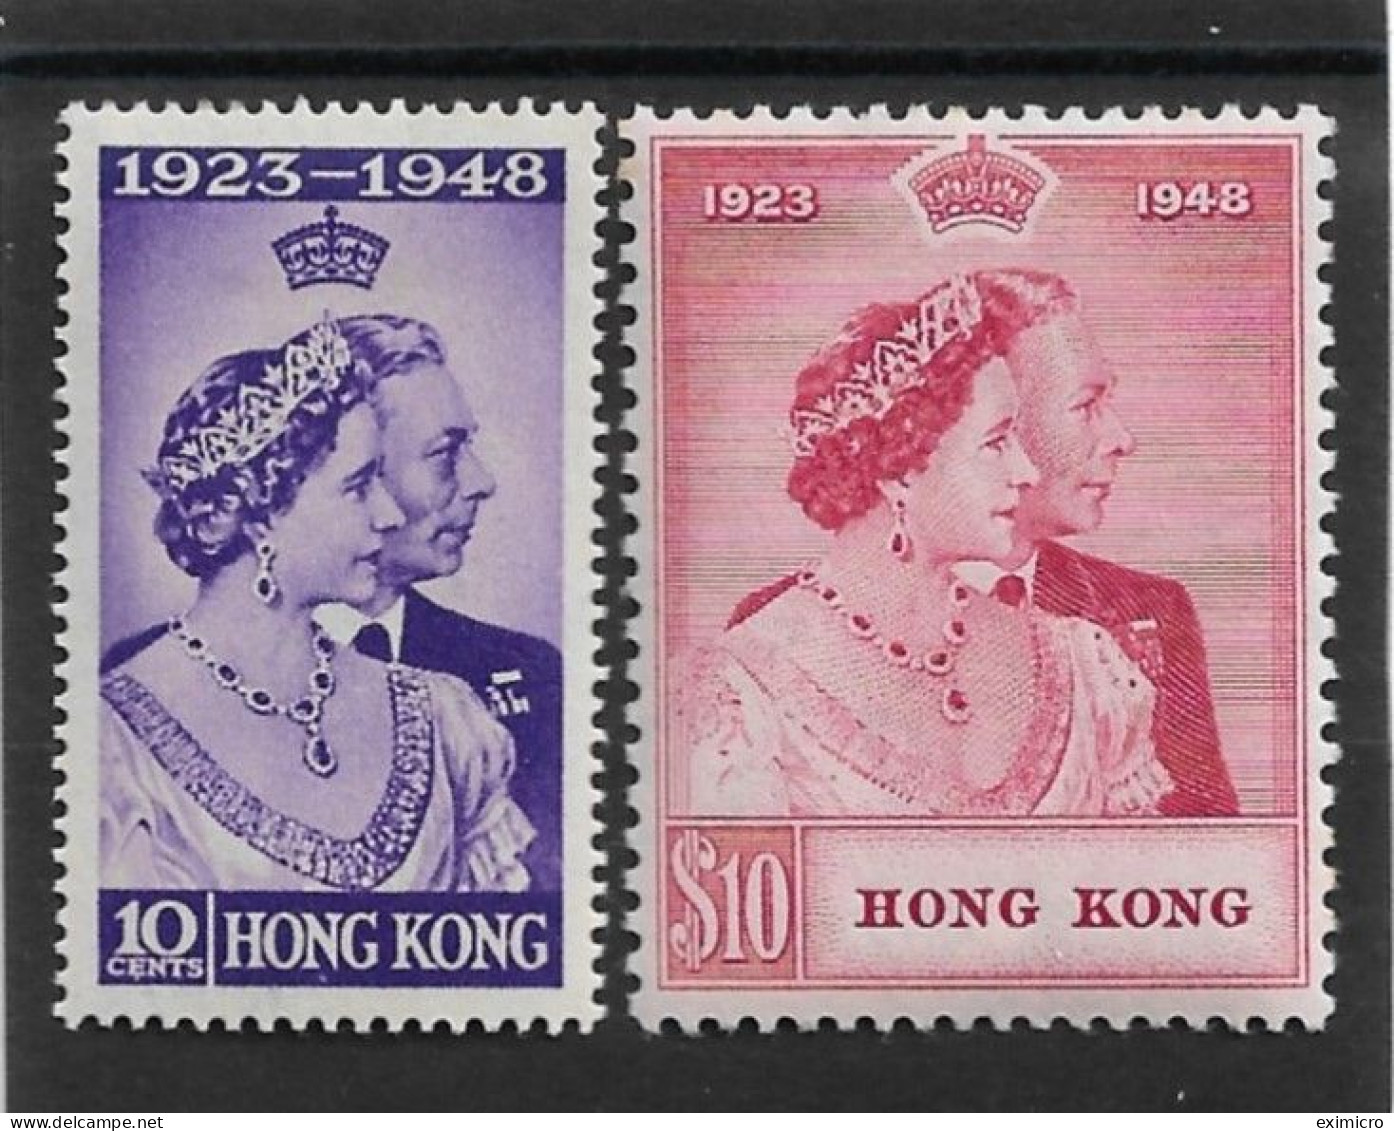 HONG KONG 1948 SILVER WEDDING SET LIGHTLY MOUNTED MINT Cat £278+ - Nuovi